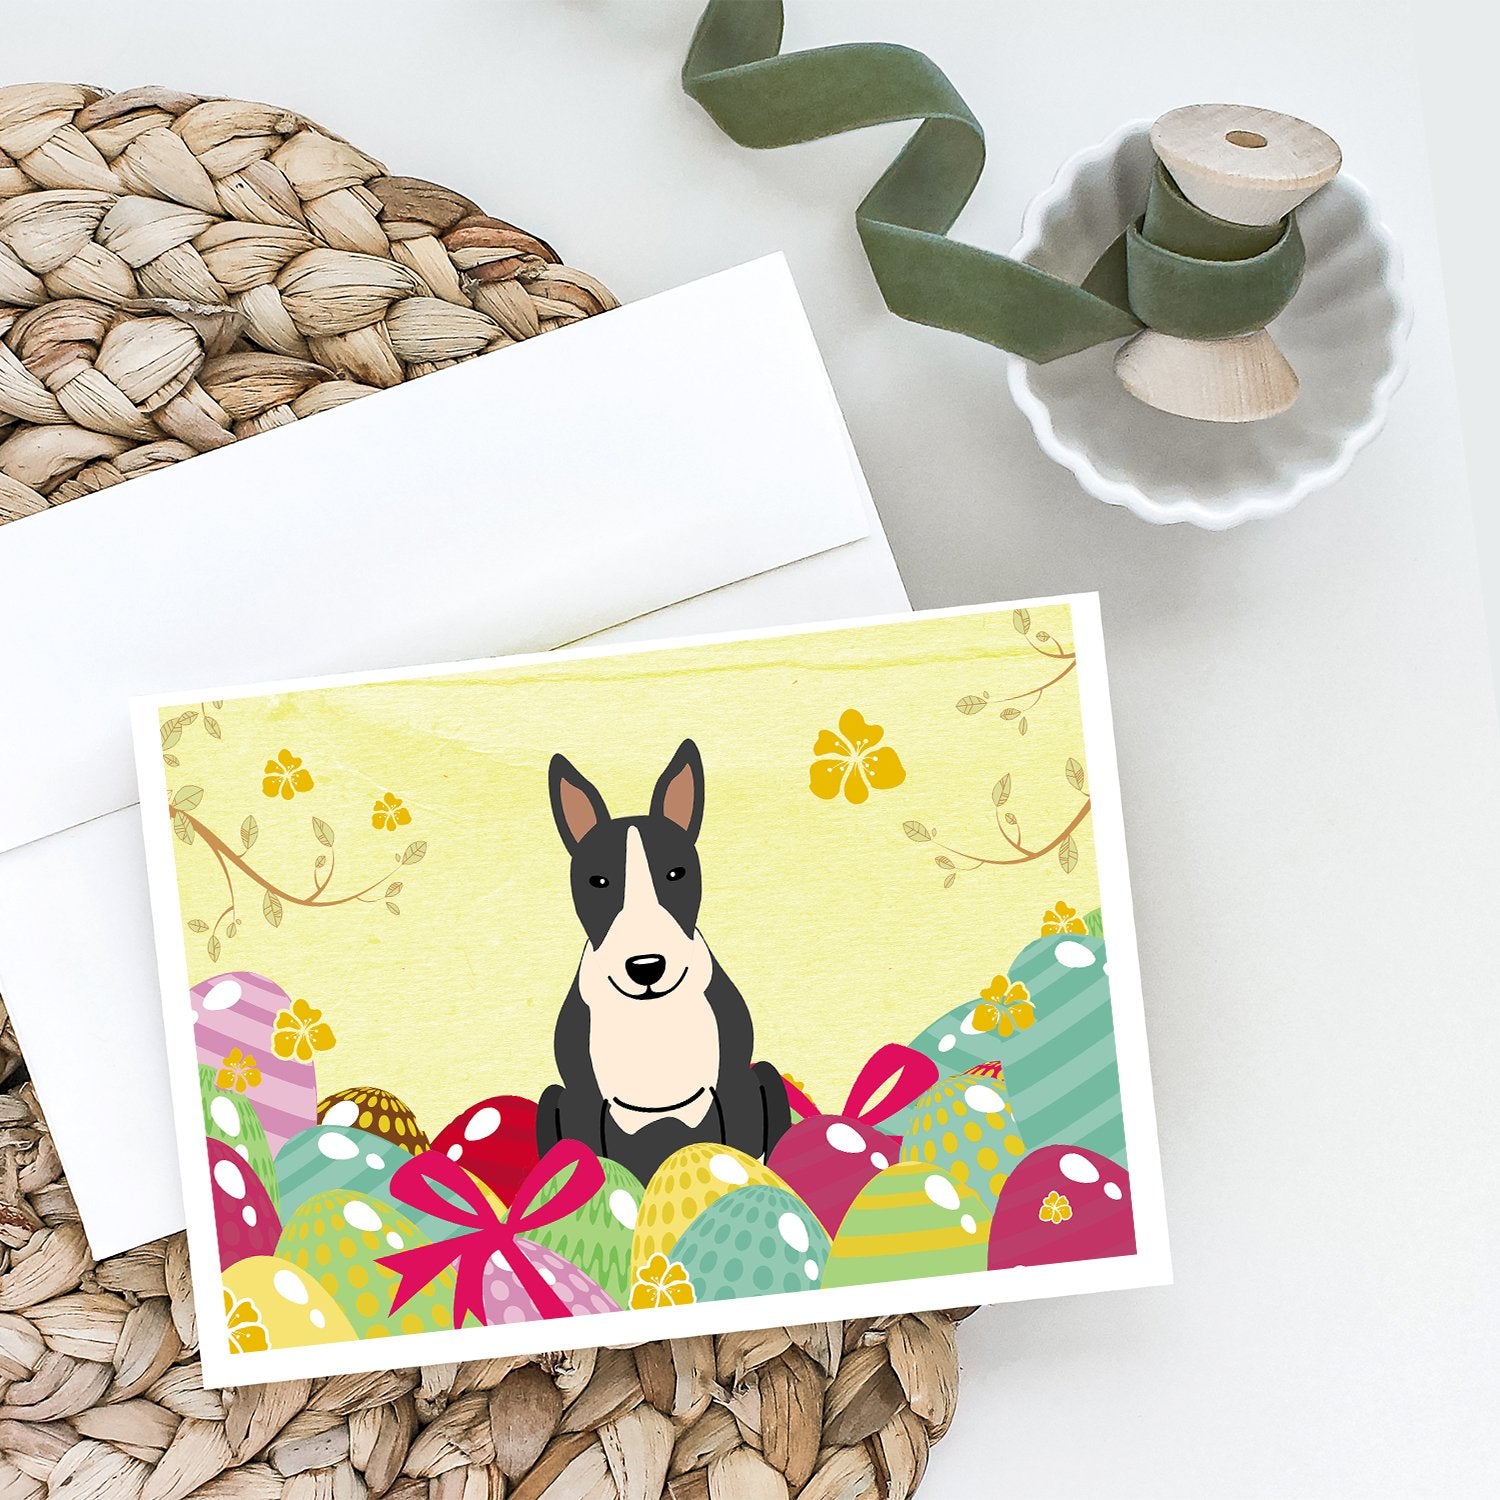 Buy this Easter Eggs Bull Terrier Black White Greeting Cards and Envelopes Pack of 8